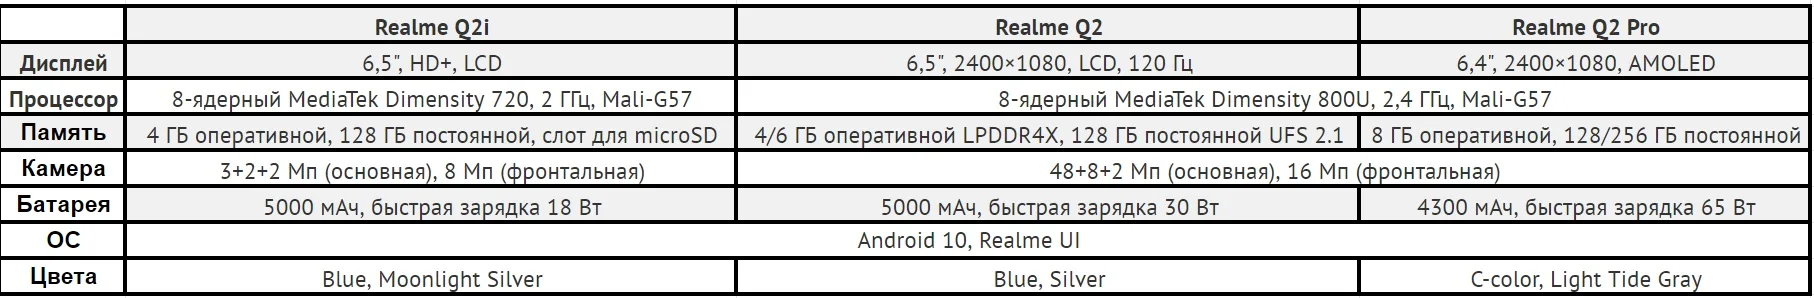 Realme представила трио бюджетных смартфонов Q2, Q2 Pro и Q2i - фото 1